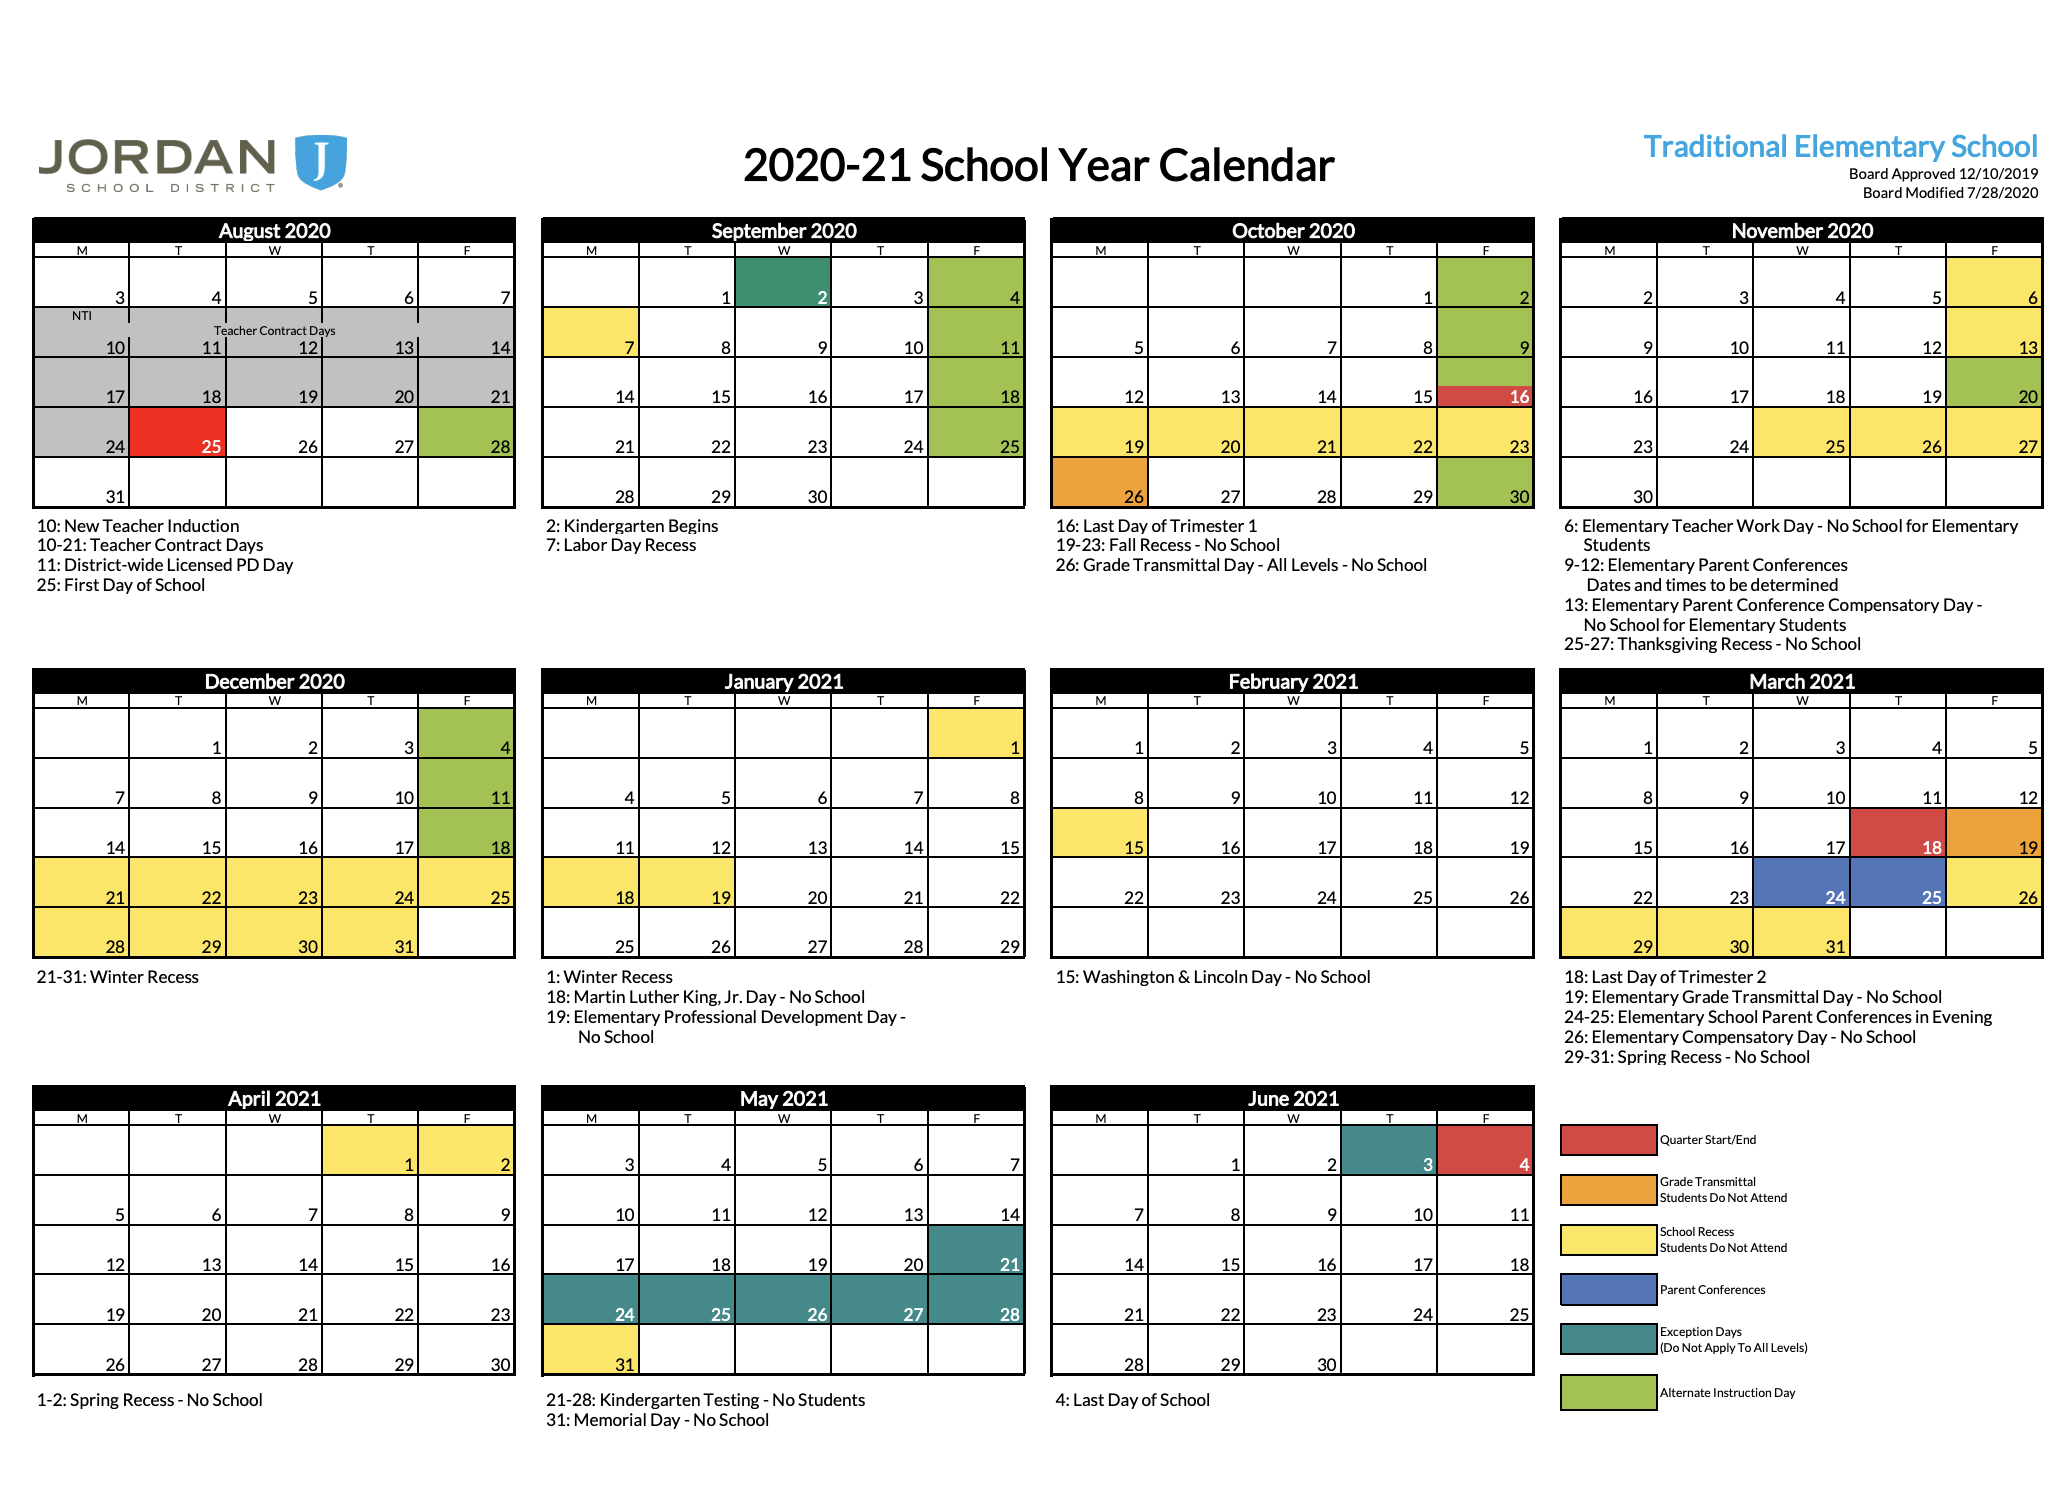 ut-law-academic-calendar-customize-and-print